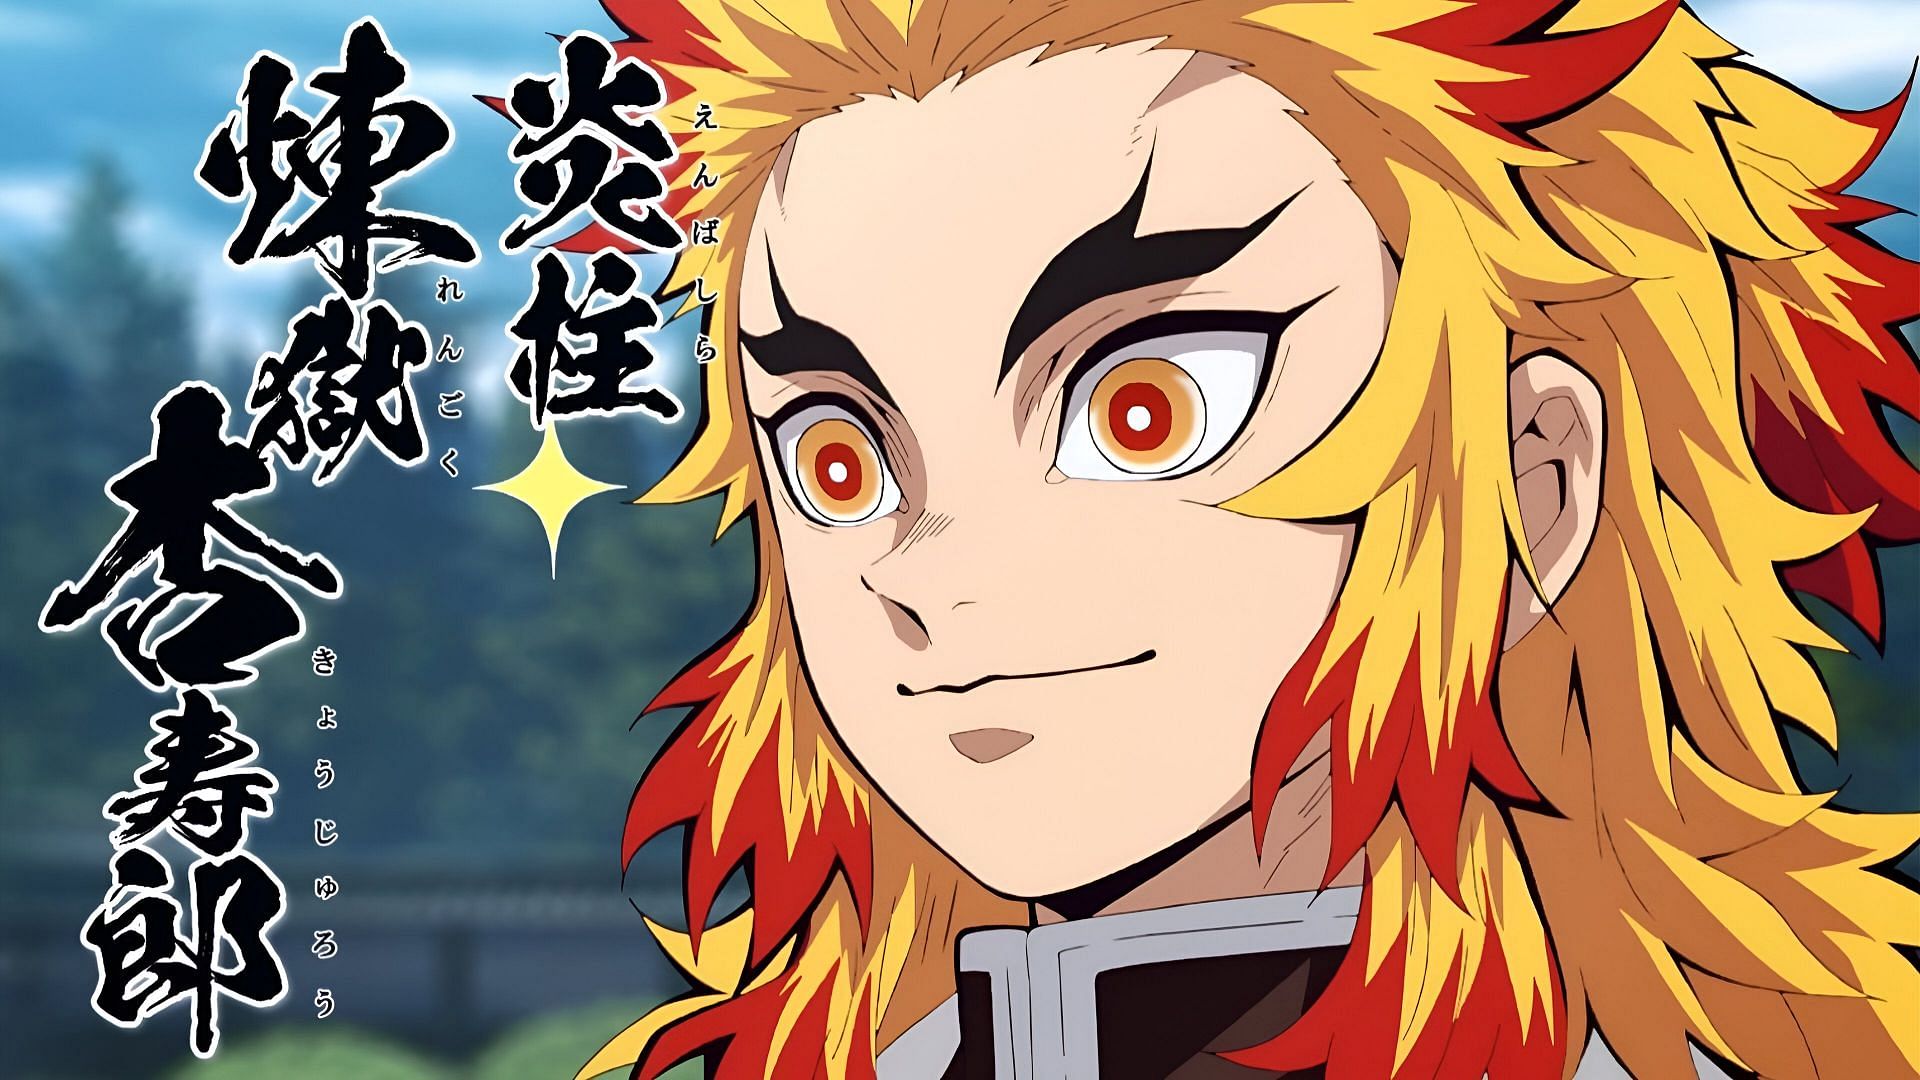 Rengoku as seen in the anime (Image via Ufotable)